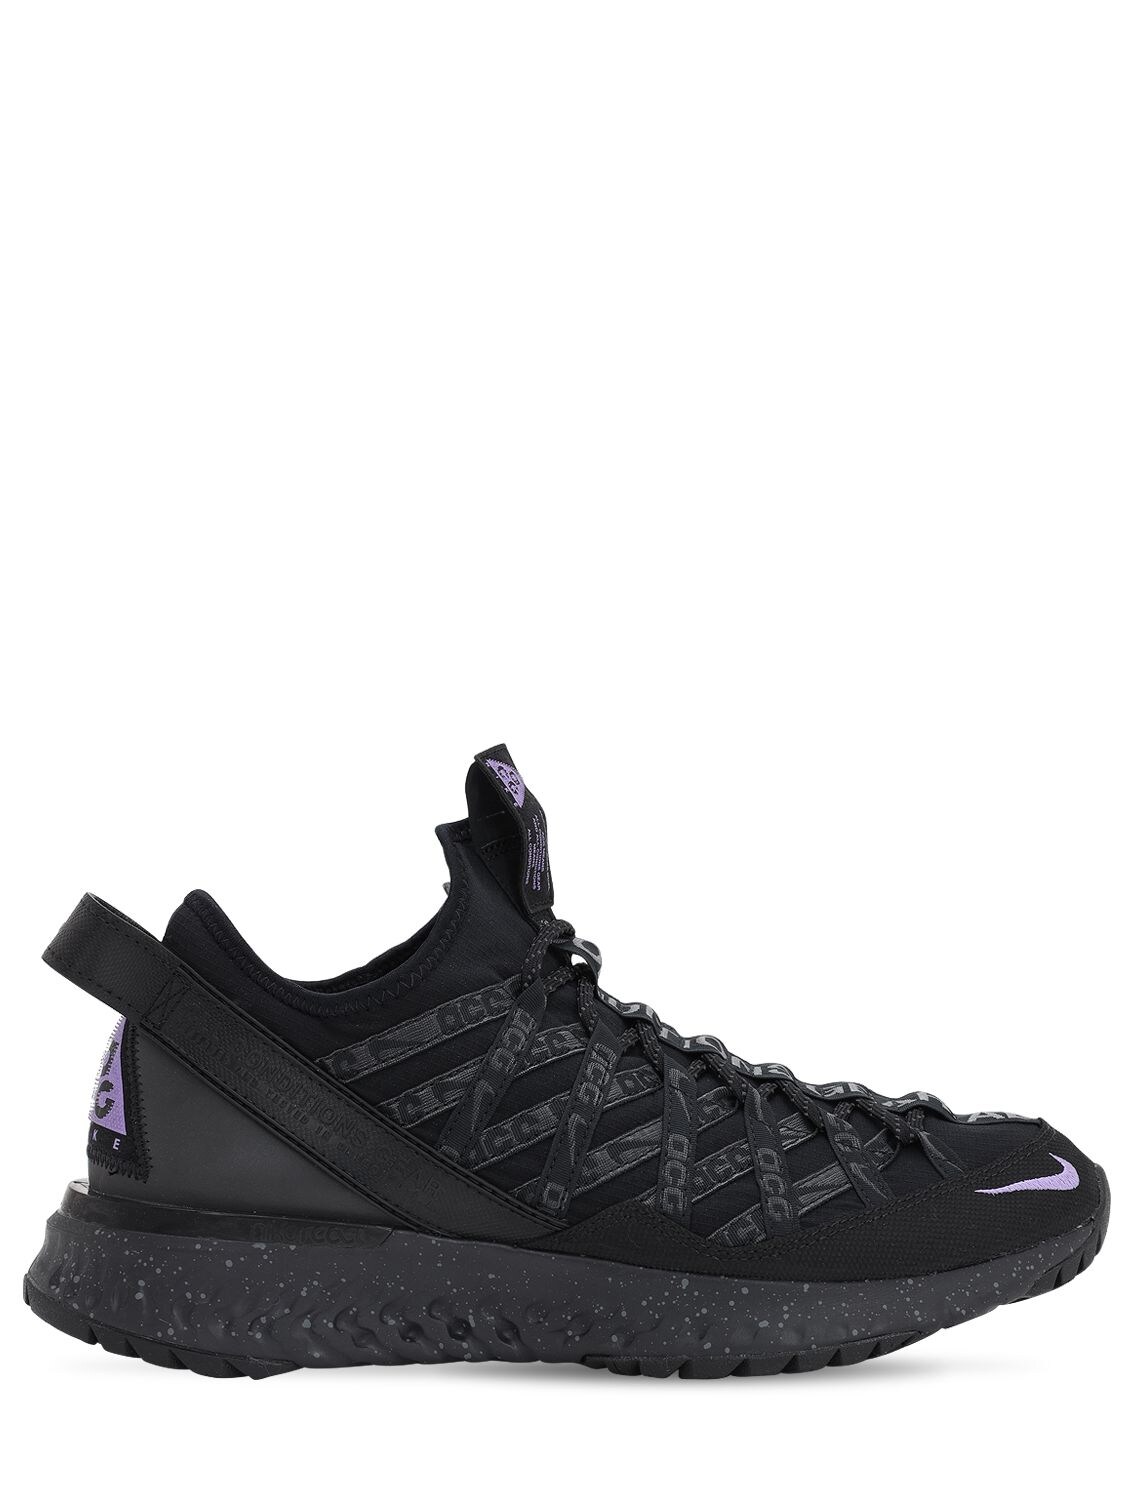 Nike Acg React Terra Gobe Sneakers In Black,purple